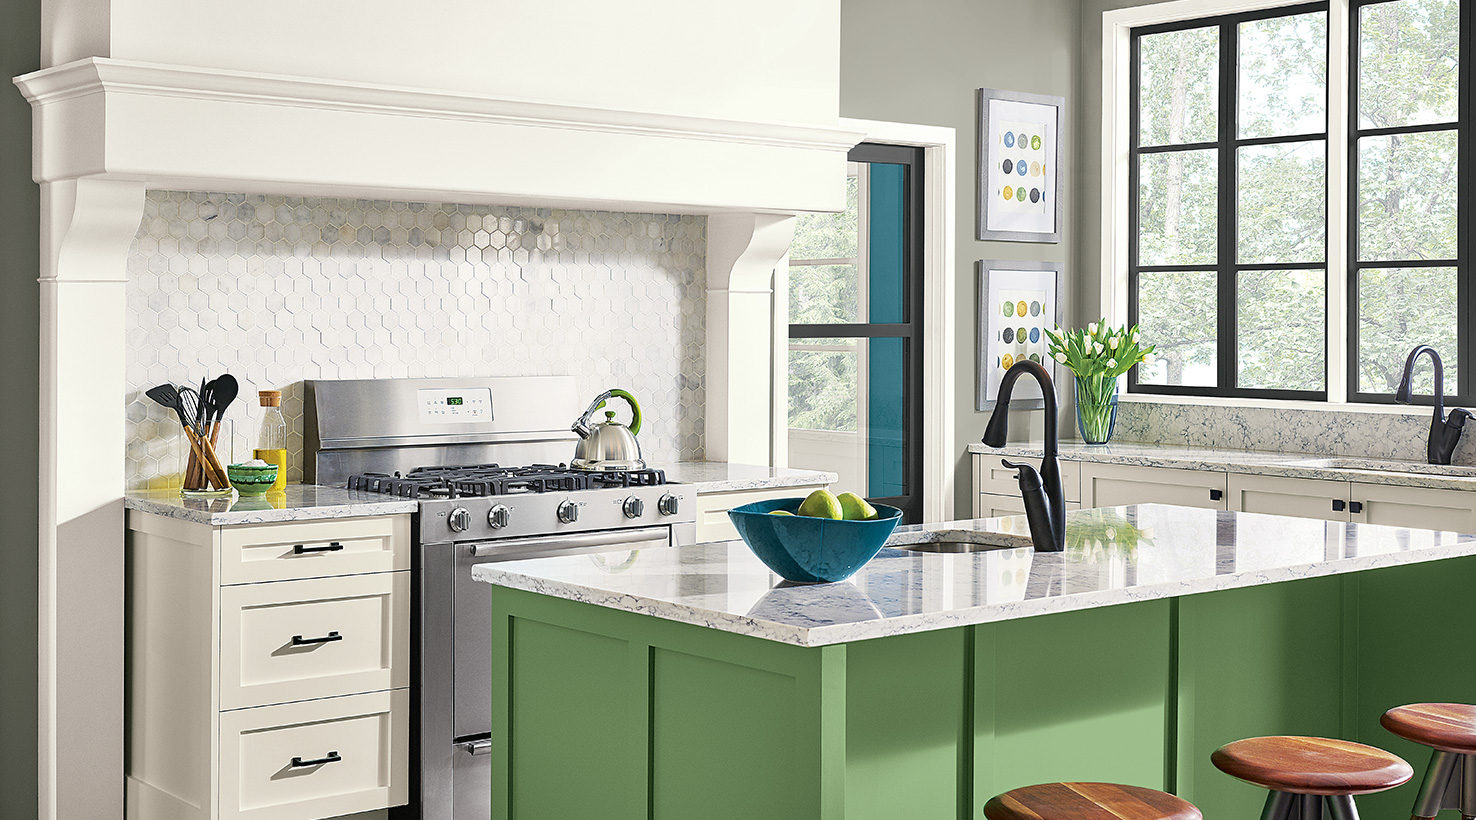 Kitchen Paint Color Ideas Inspiration, Sherwin Williams Kitchen Cabinet Paint Colors 2021